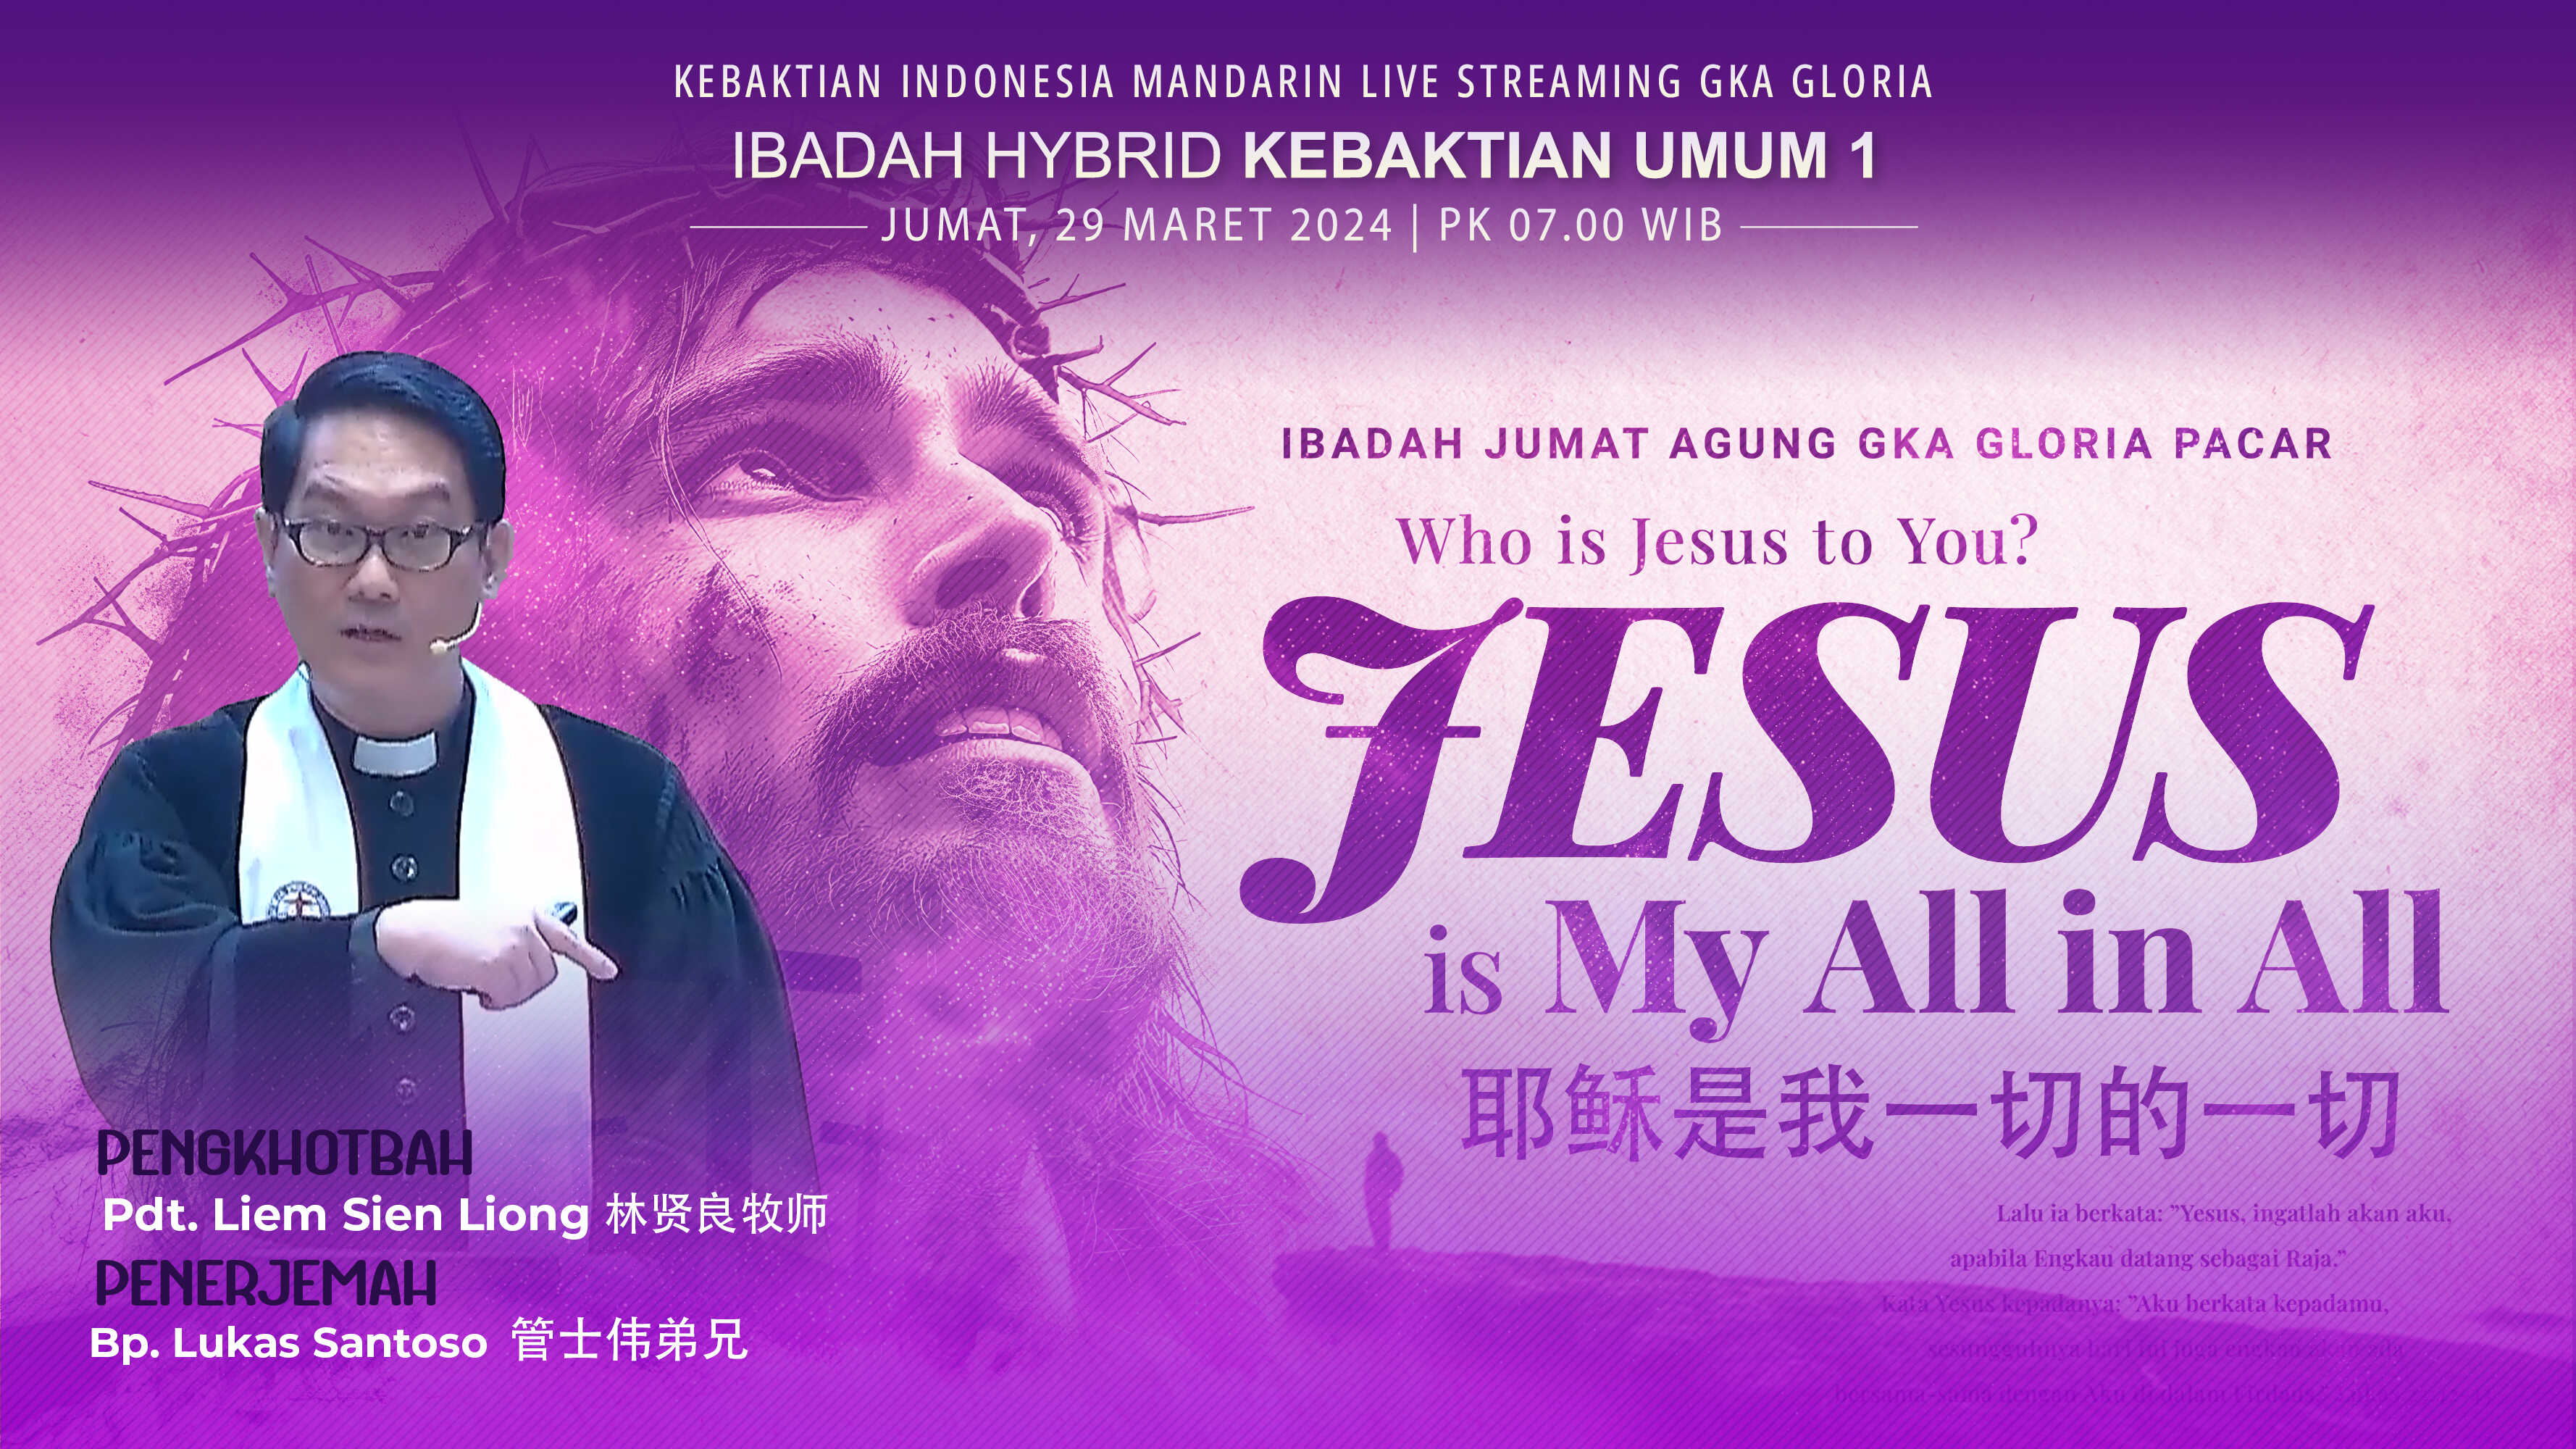 Kebaktian Umum 1 Pacar - Jesus is My All in All | 06.45 WIB